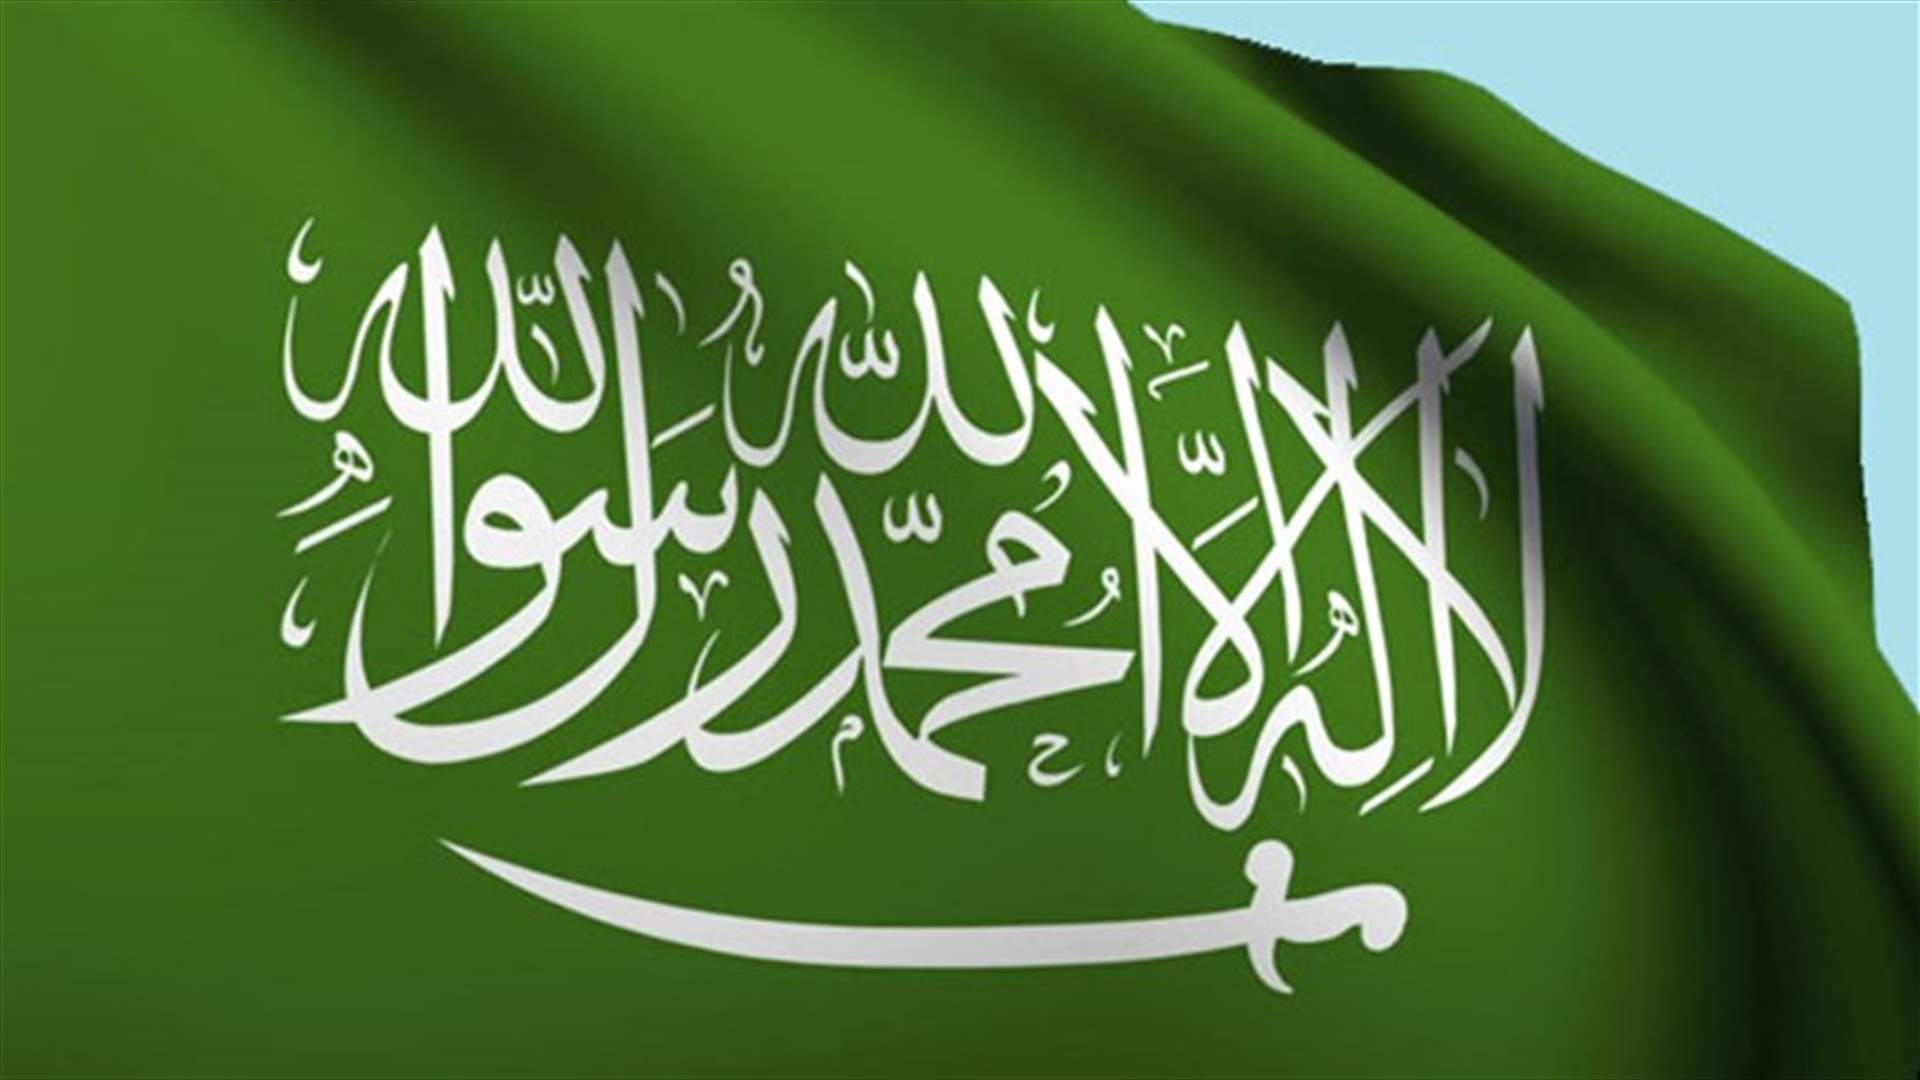 Saudi Arabia to send planes to Turkey for Islamic State fight -media